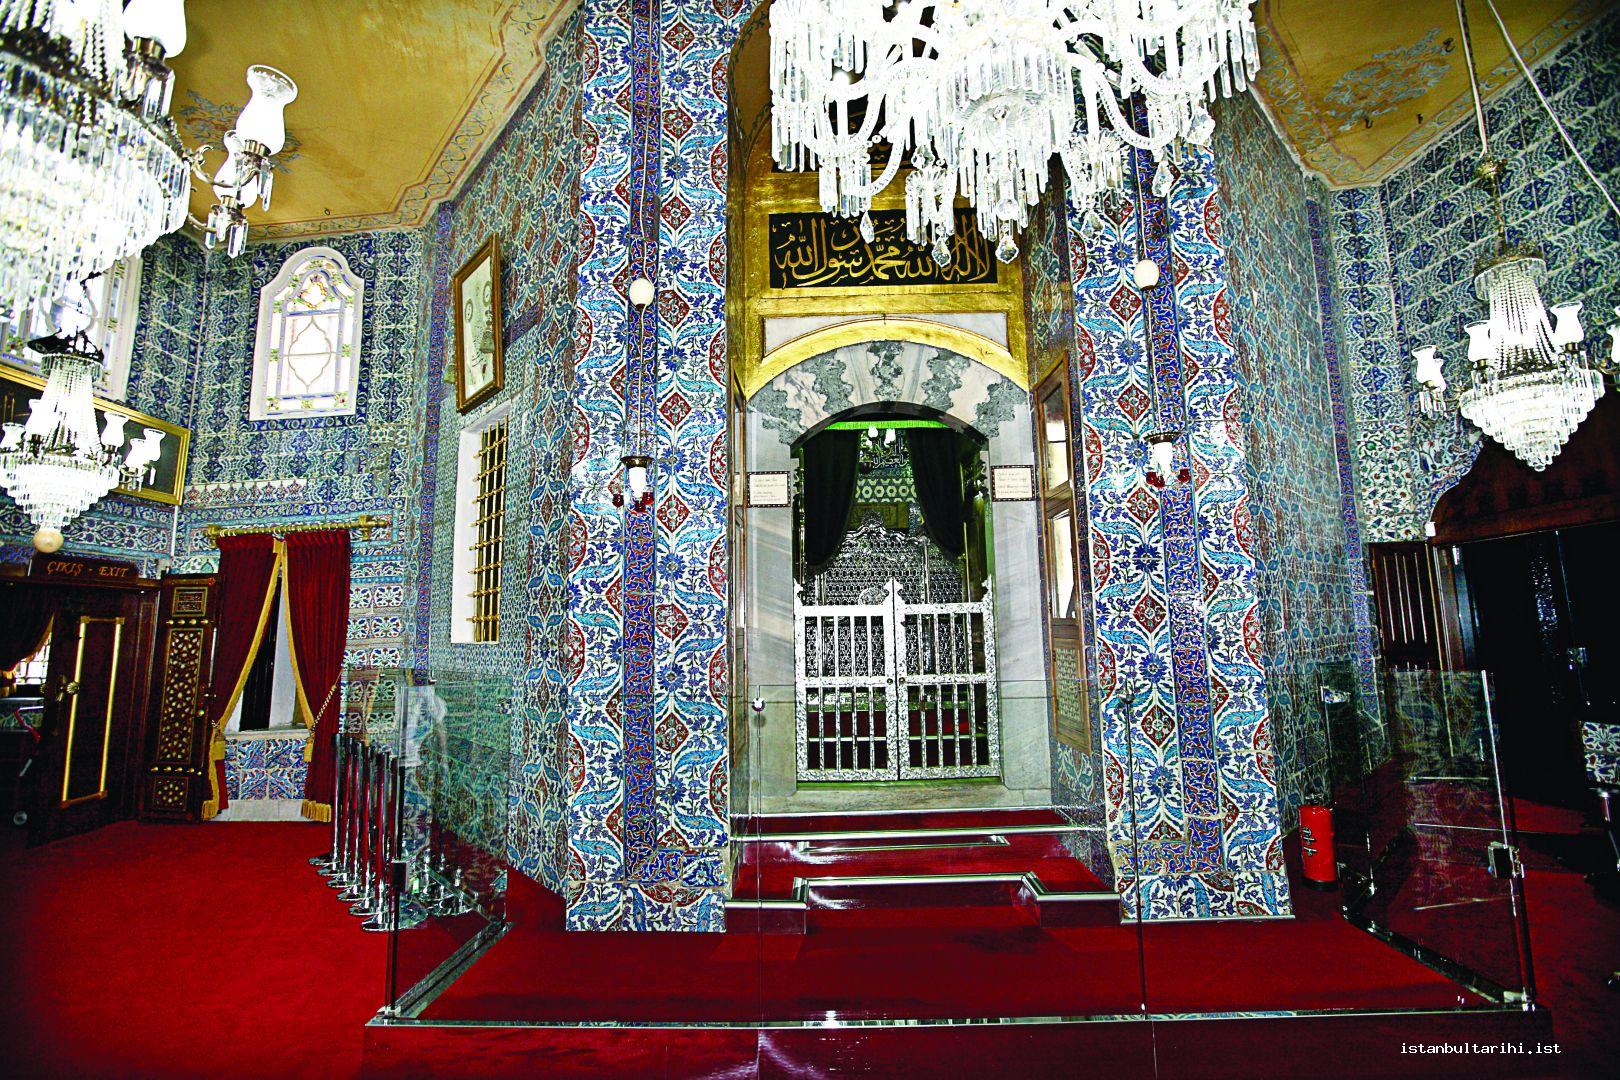 1- The tomb of Abu Ayyub al-Ansari, the entrance to the section where Abu Ayyub al-Ansari’s sarcophagus is found    